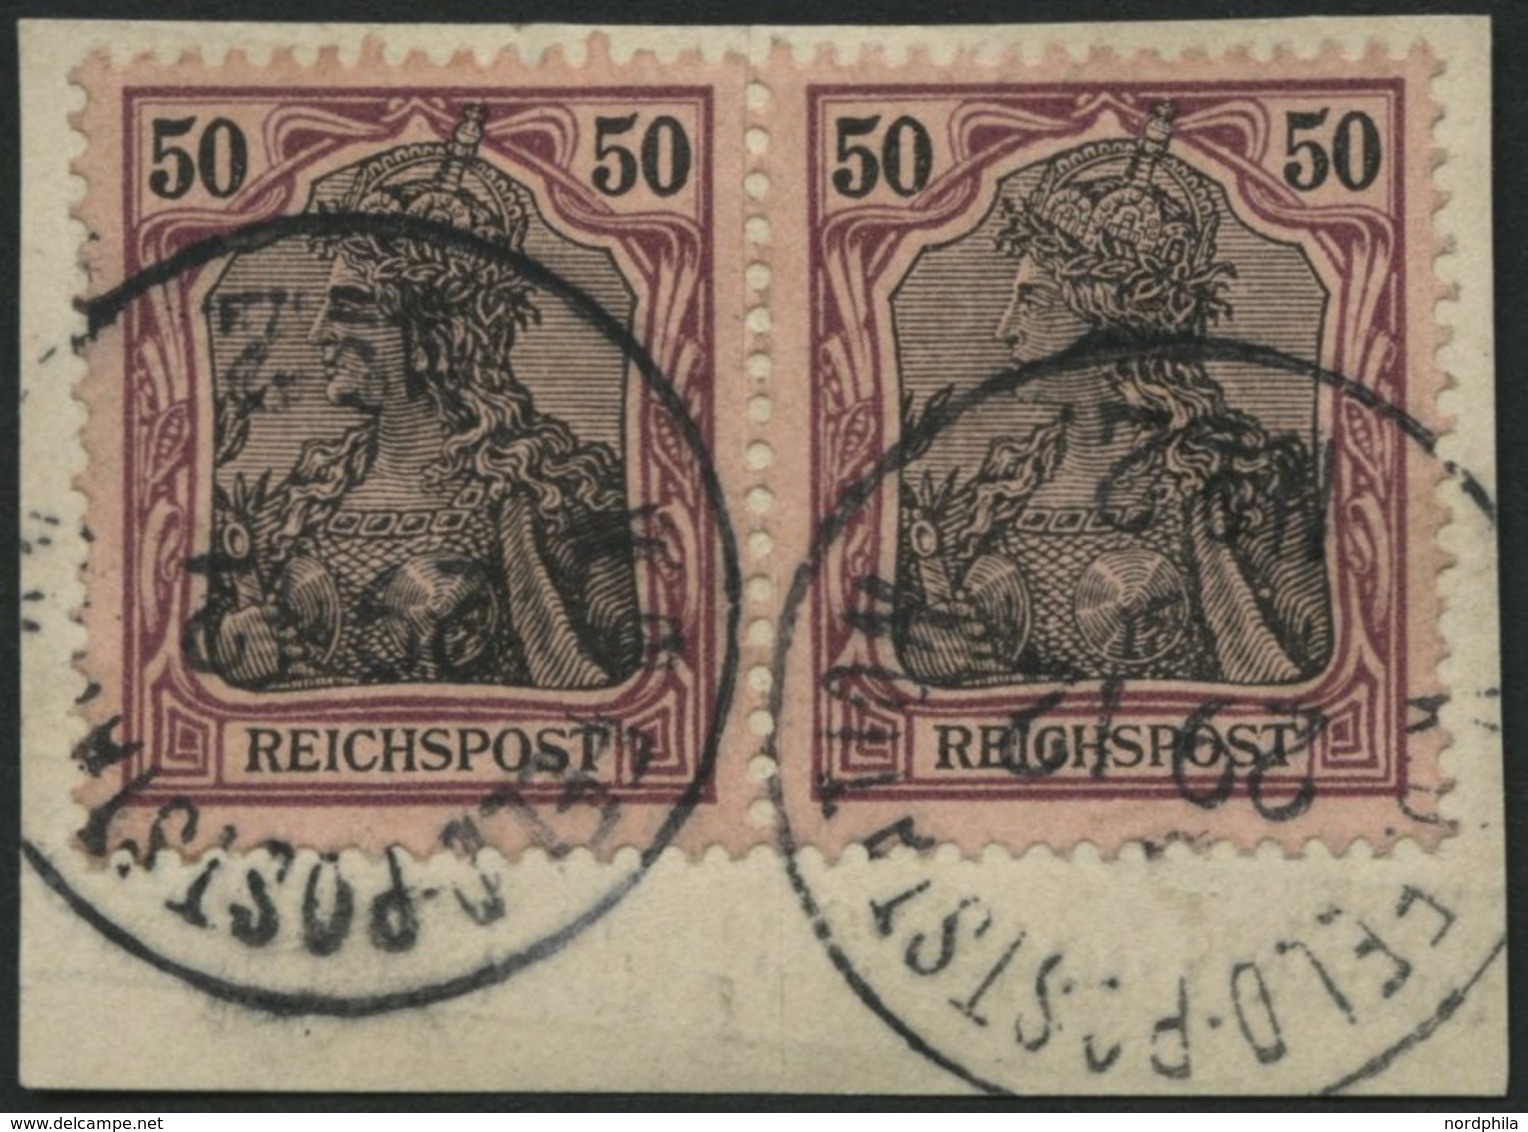 DP CHINA P Vg Paar BrfStk, Petschili: 1900, 50 Pf. Reichspost Im Waagerechten Paar Auf Postabschnitt (rückseitige Telegr - China (offices)